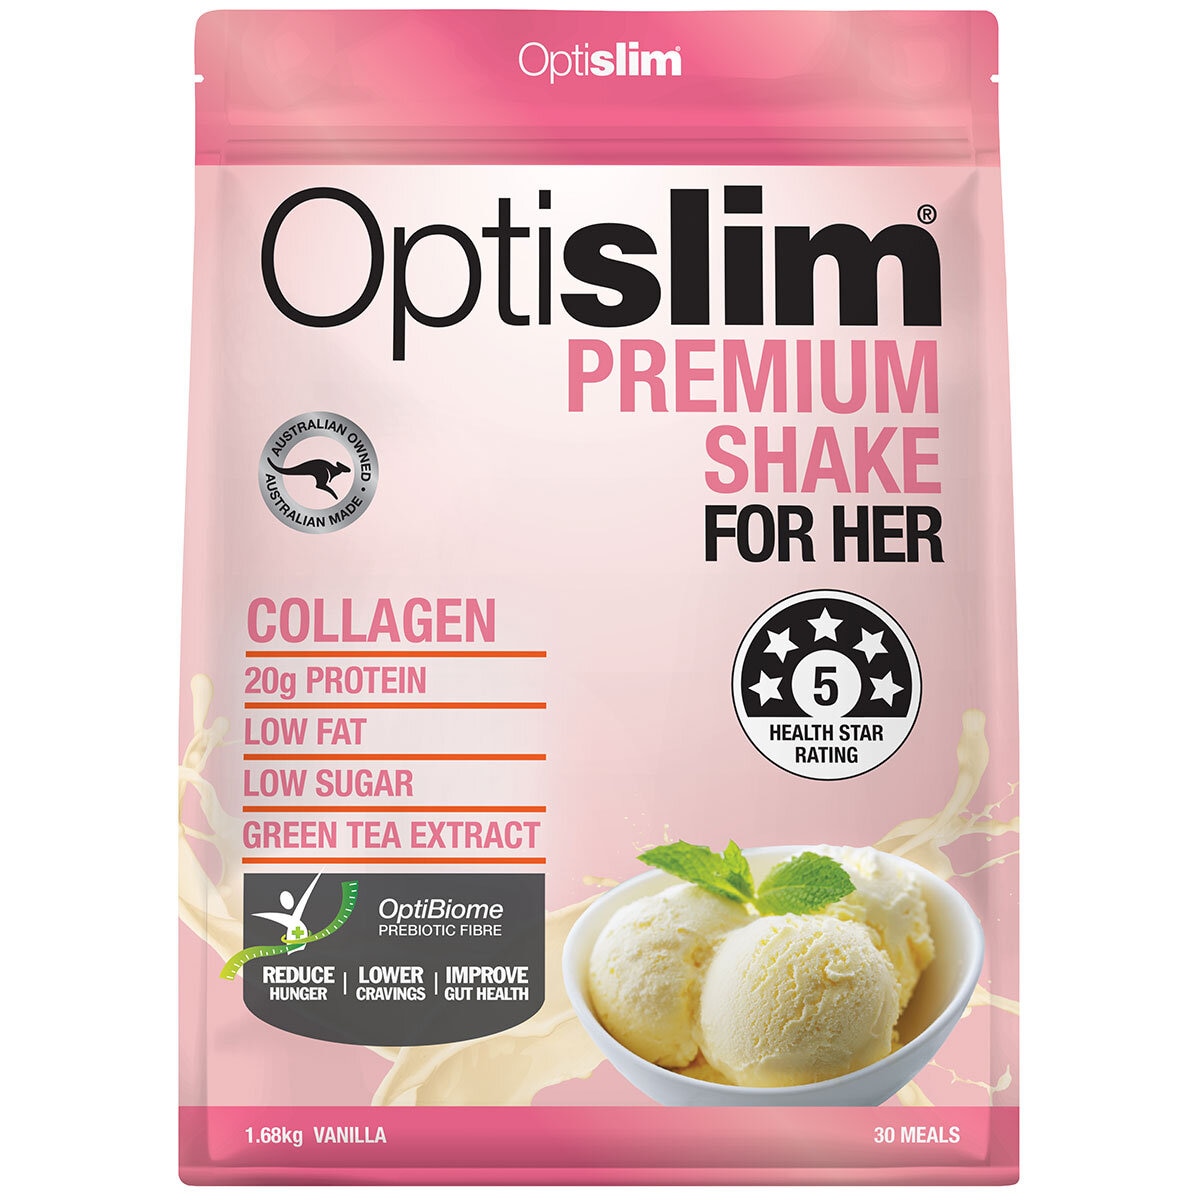 Optislim Premium Shake for Her 1.68kg Vanilla